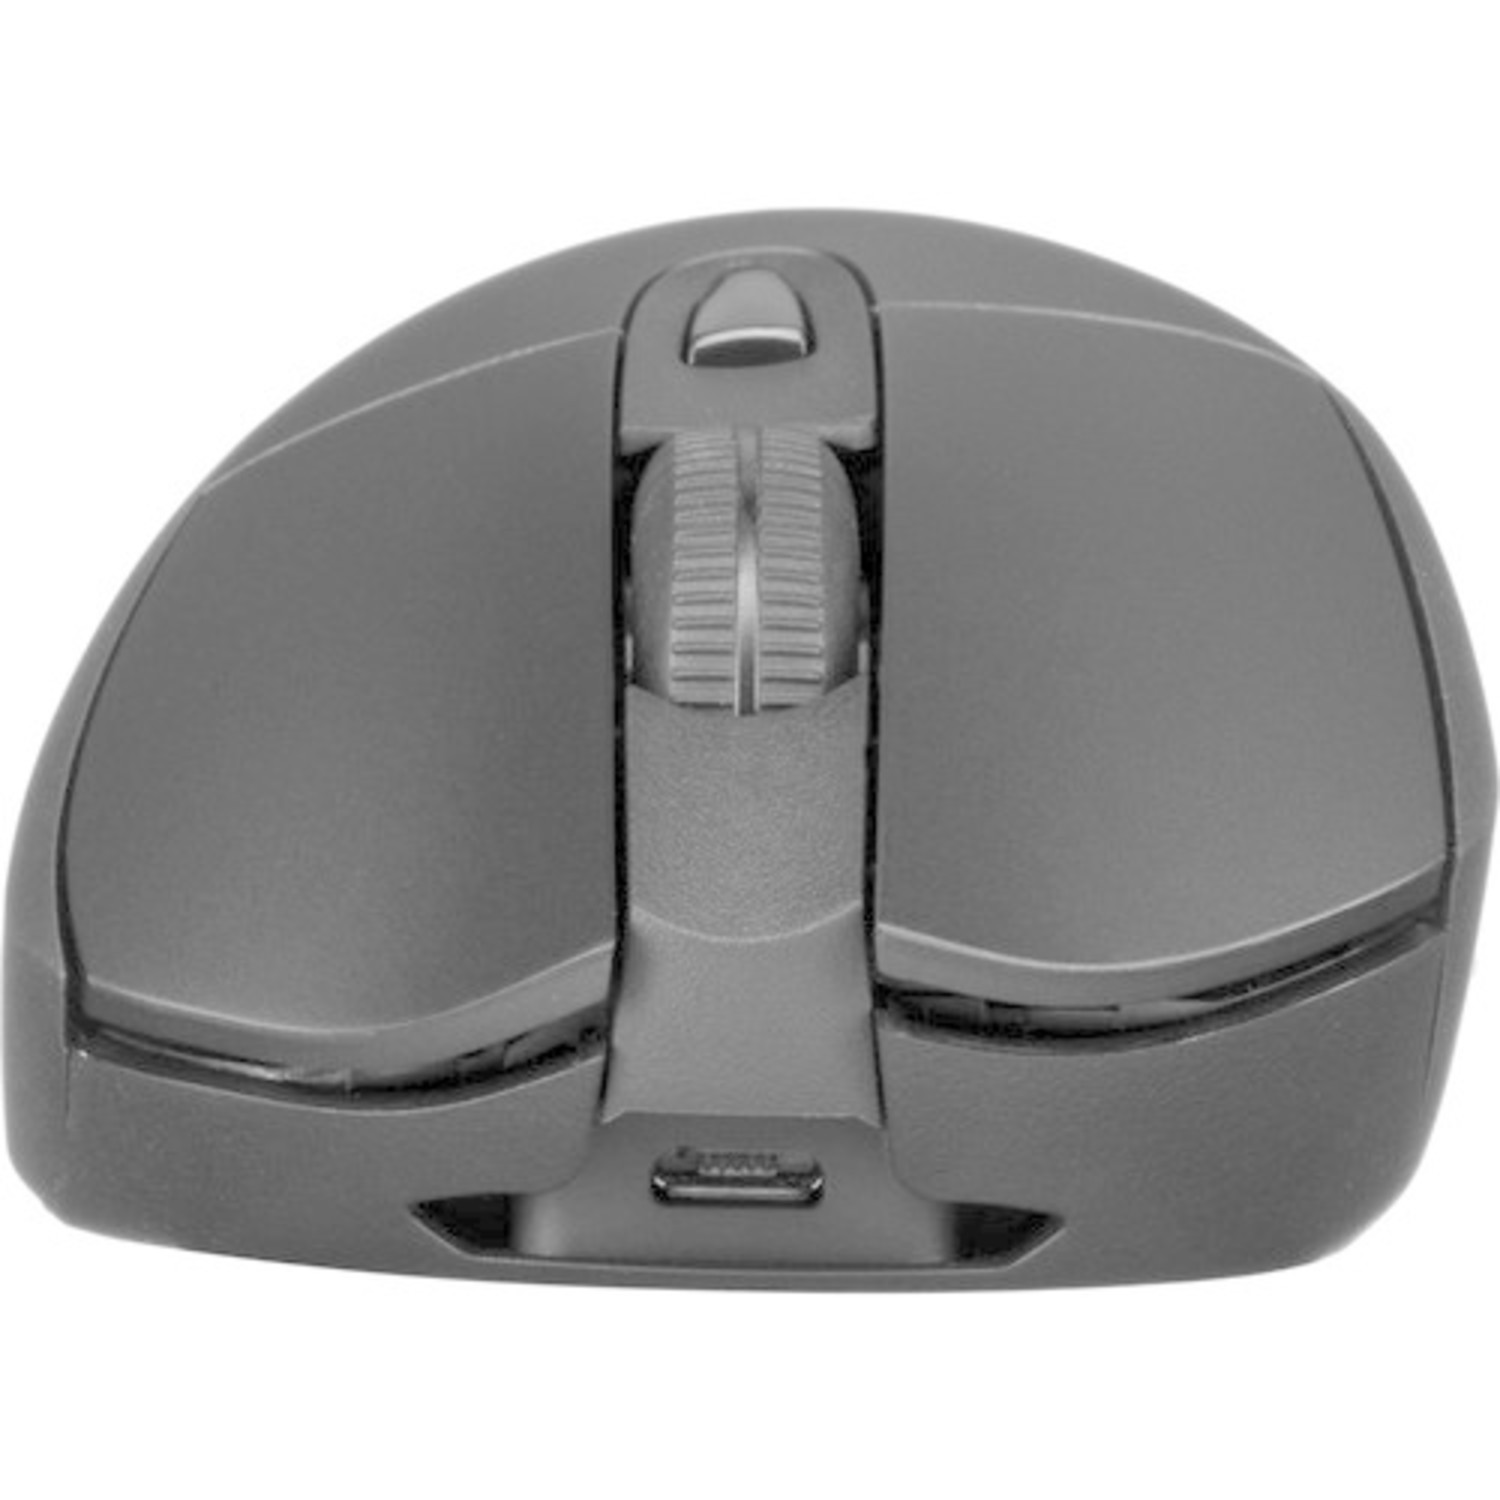 Logitech G703 LIGHTSPEED Wireless Gaming Mouse - kite+key, Rutgers